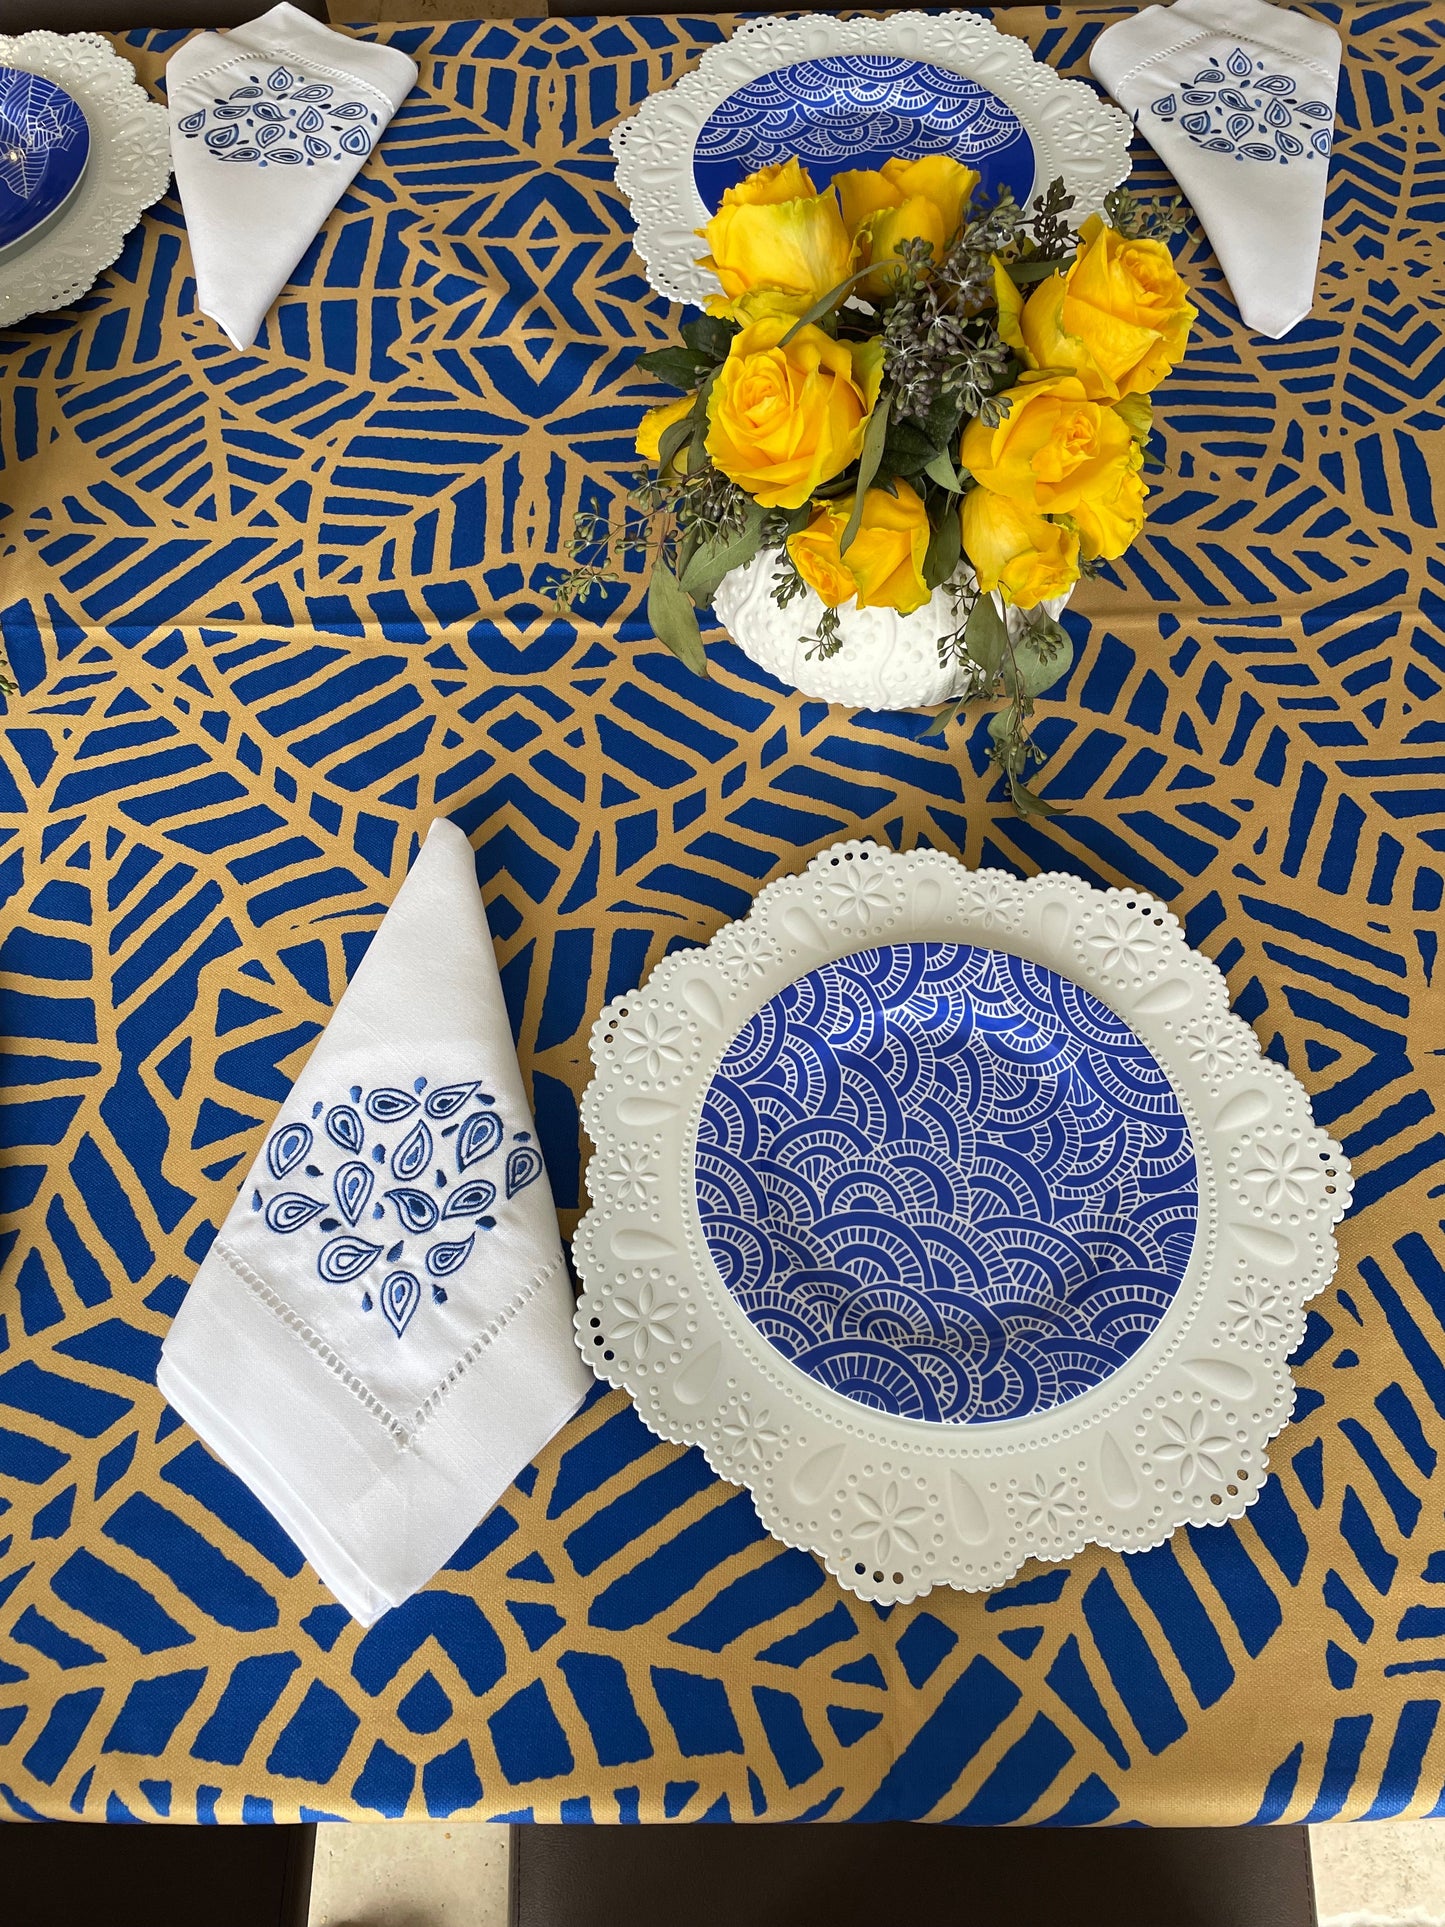 White and Blue Geometric Porcelain Plates